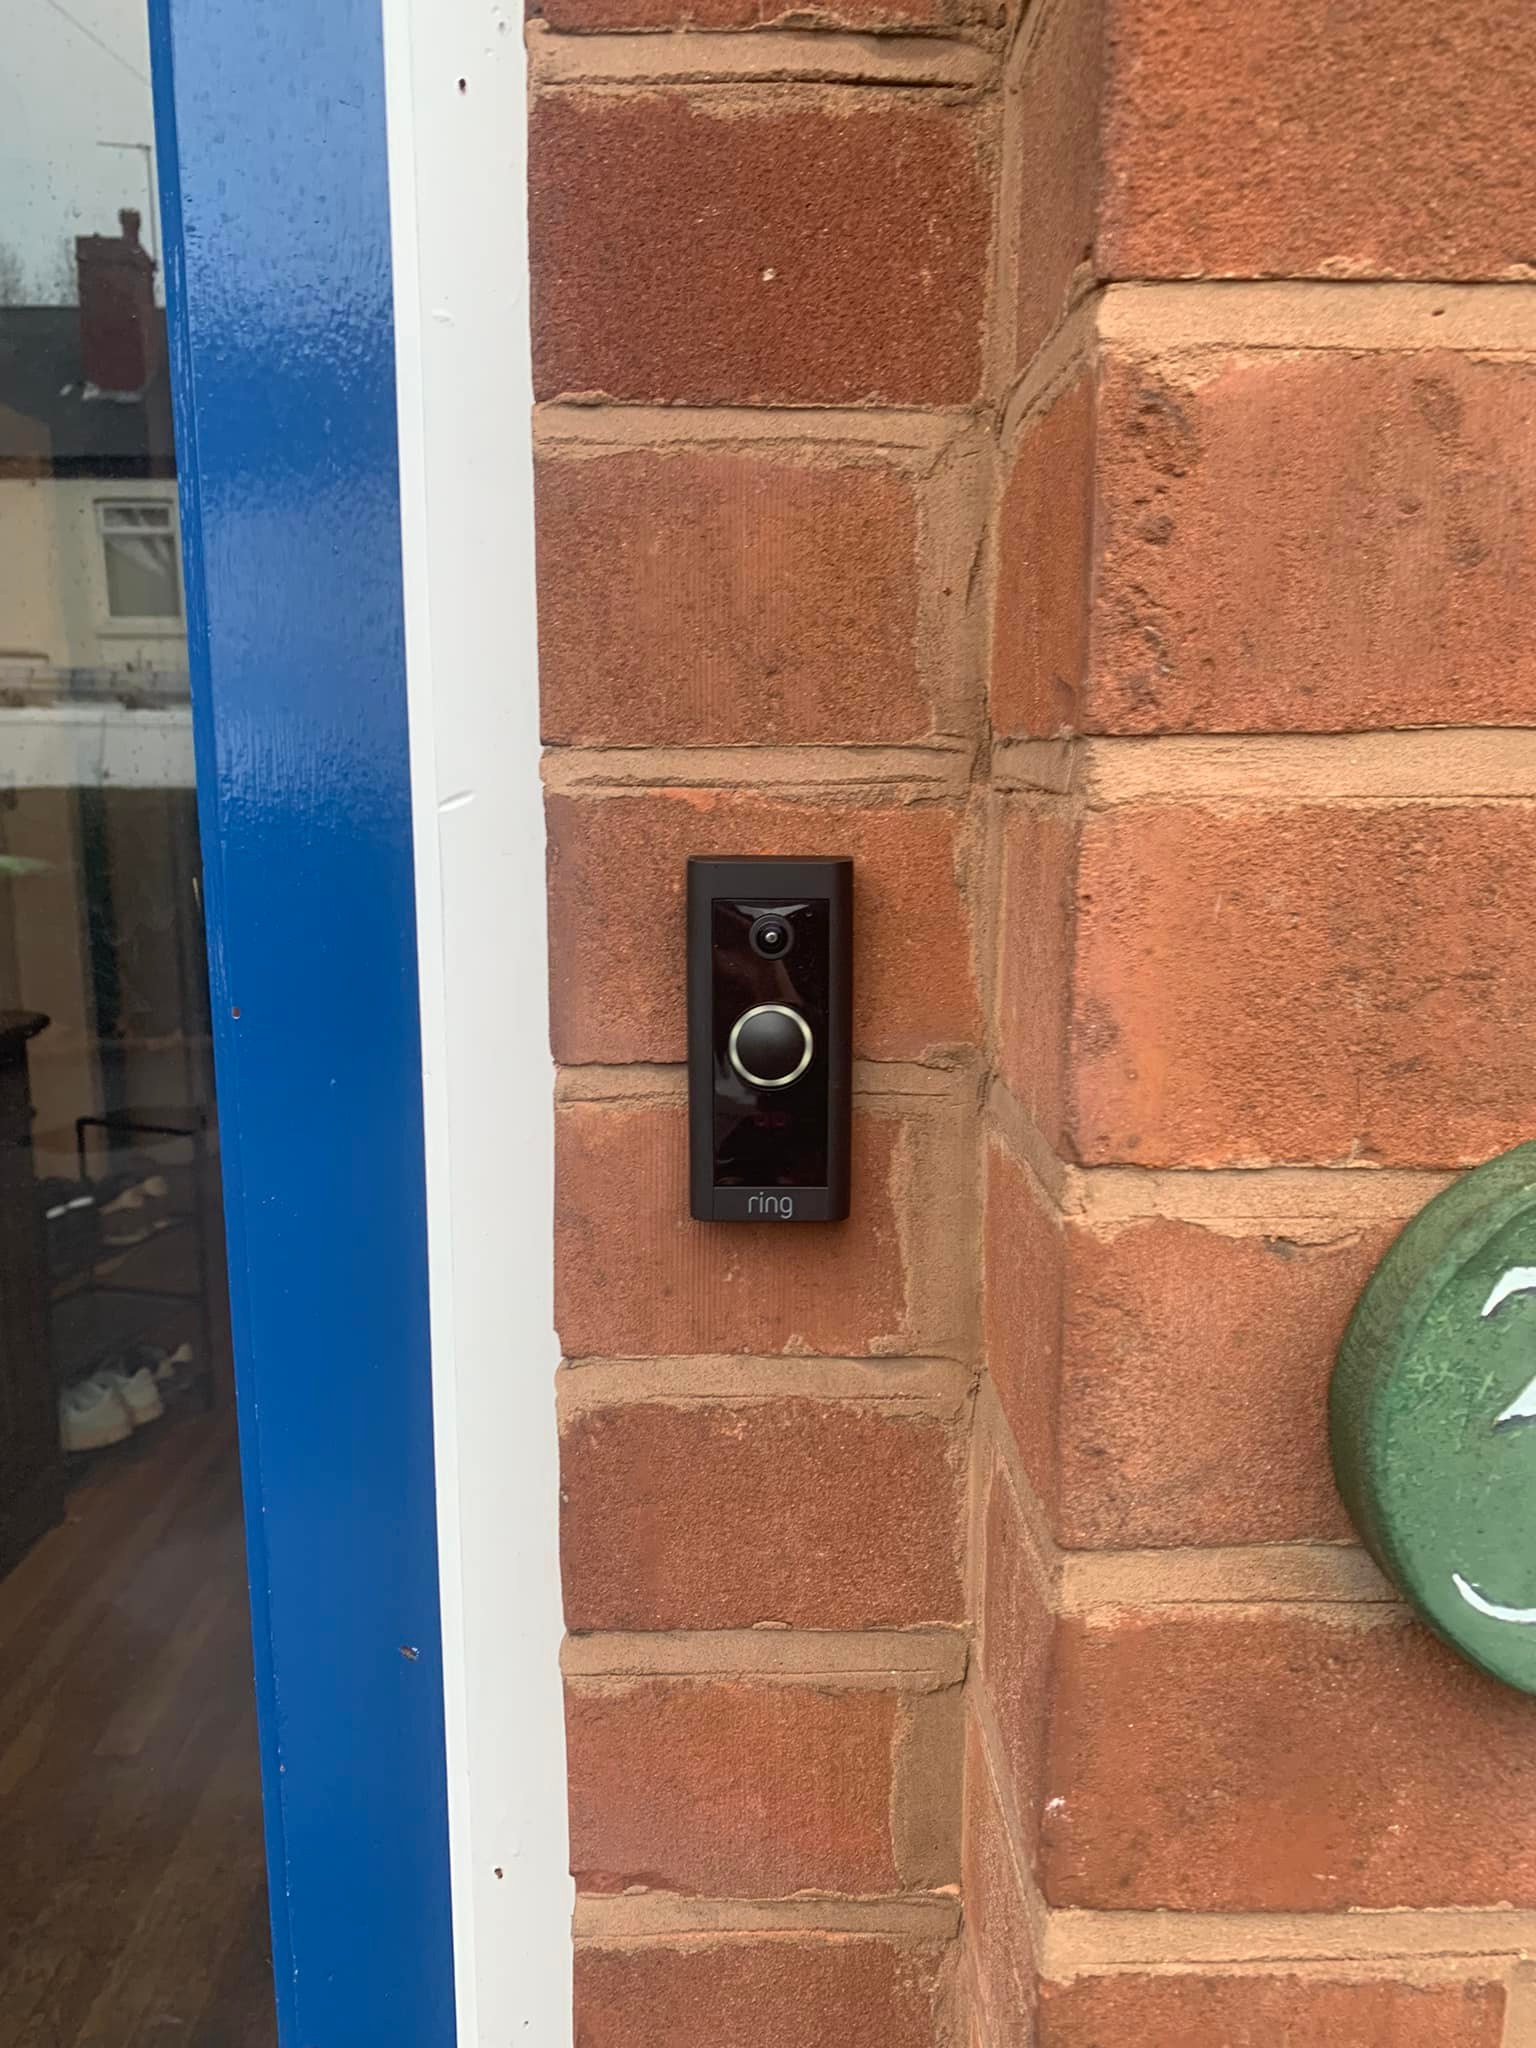 Ring doorbell on a wall